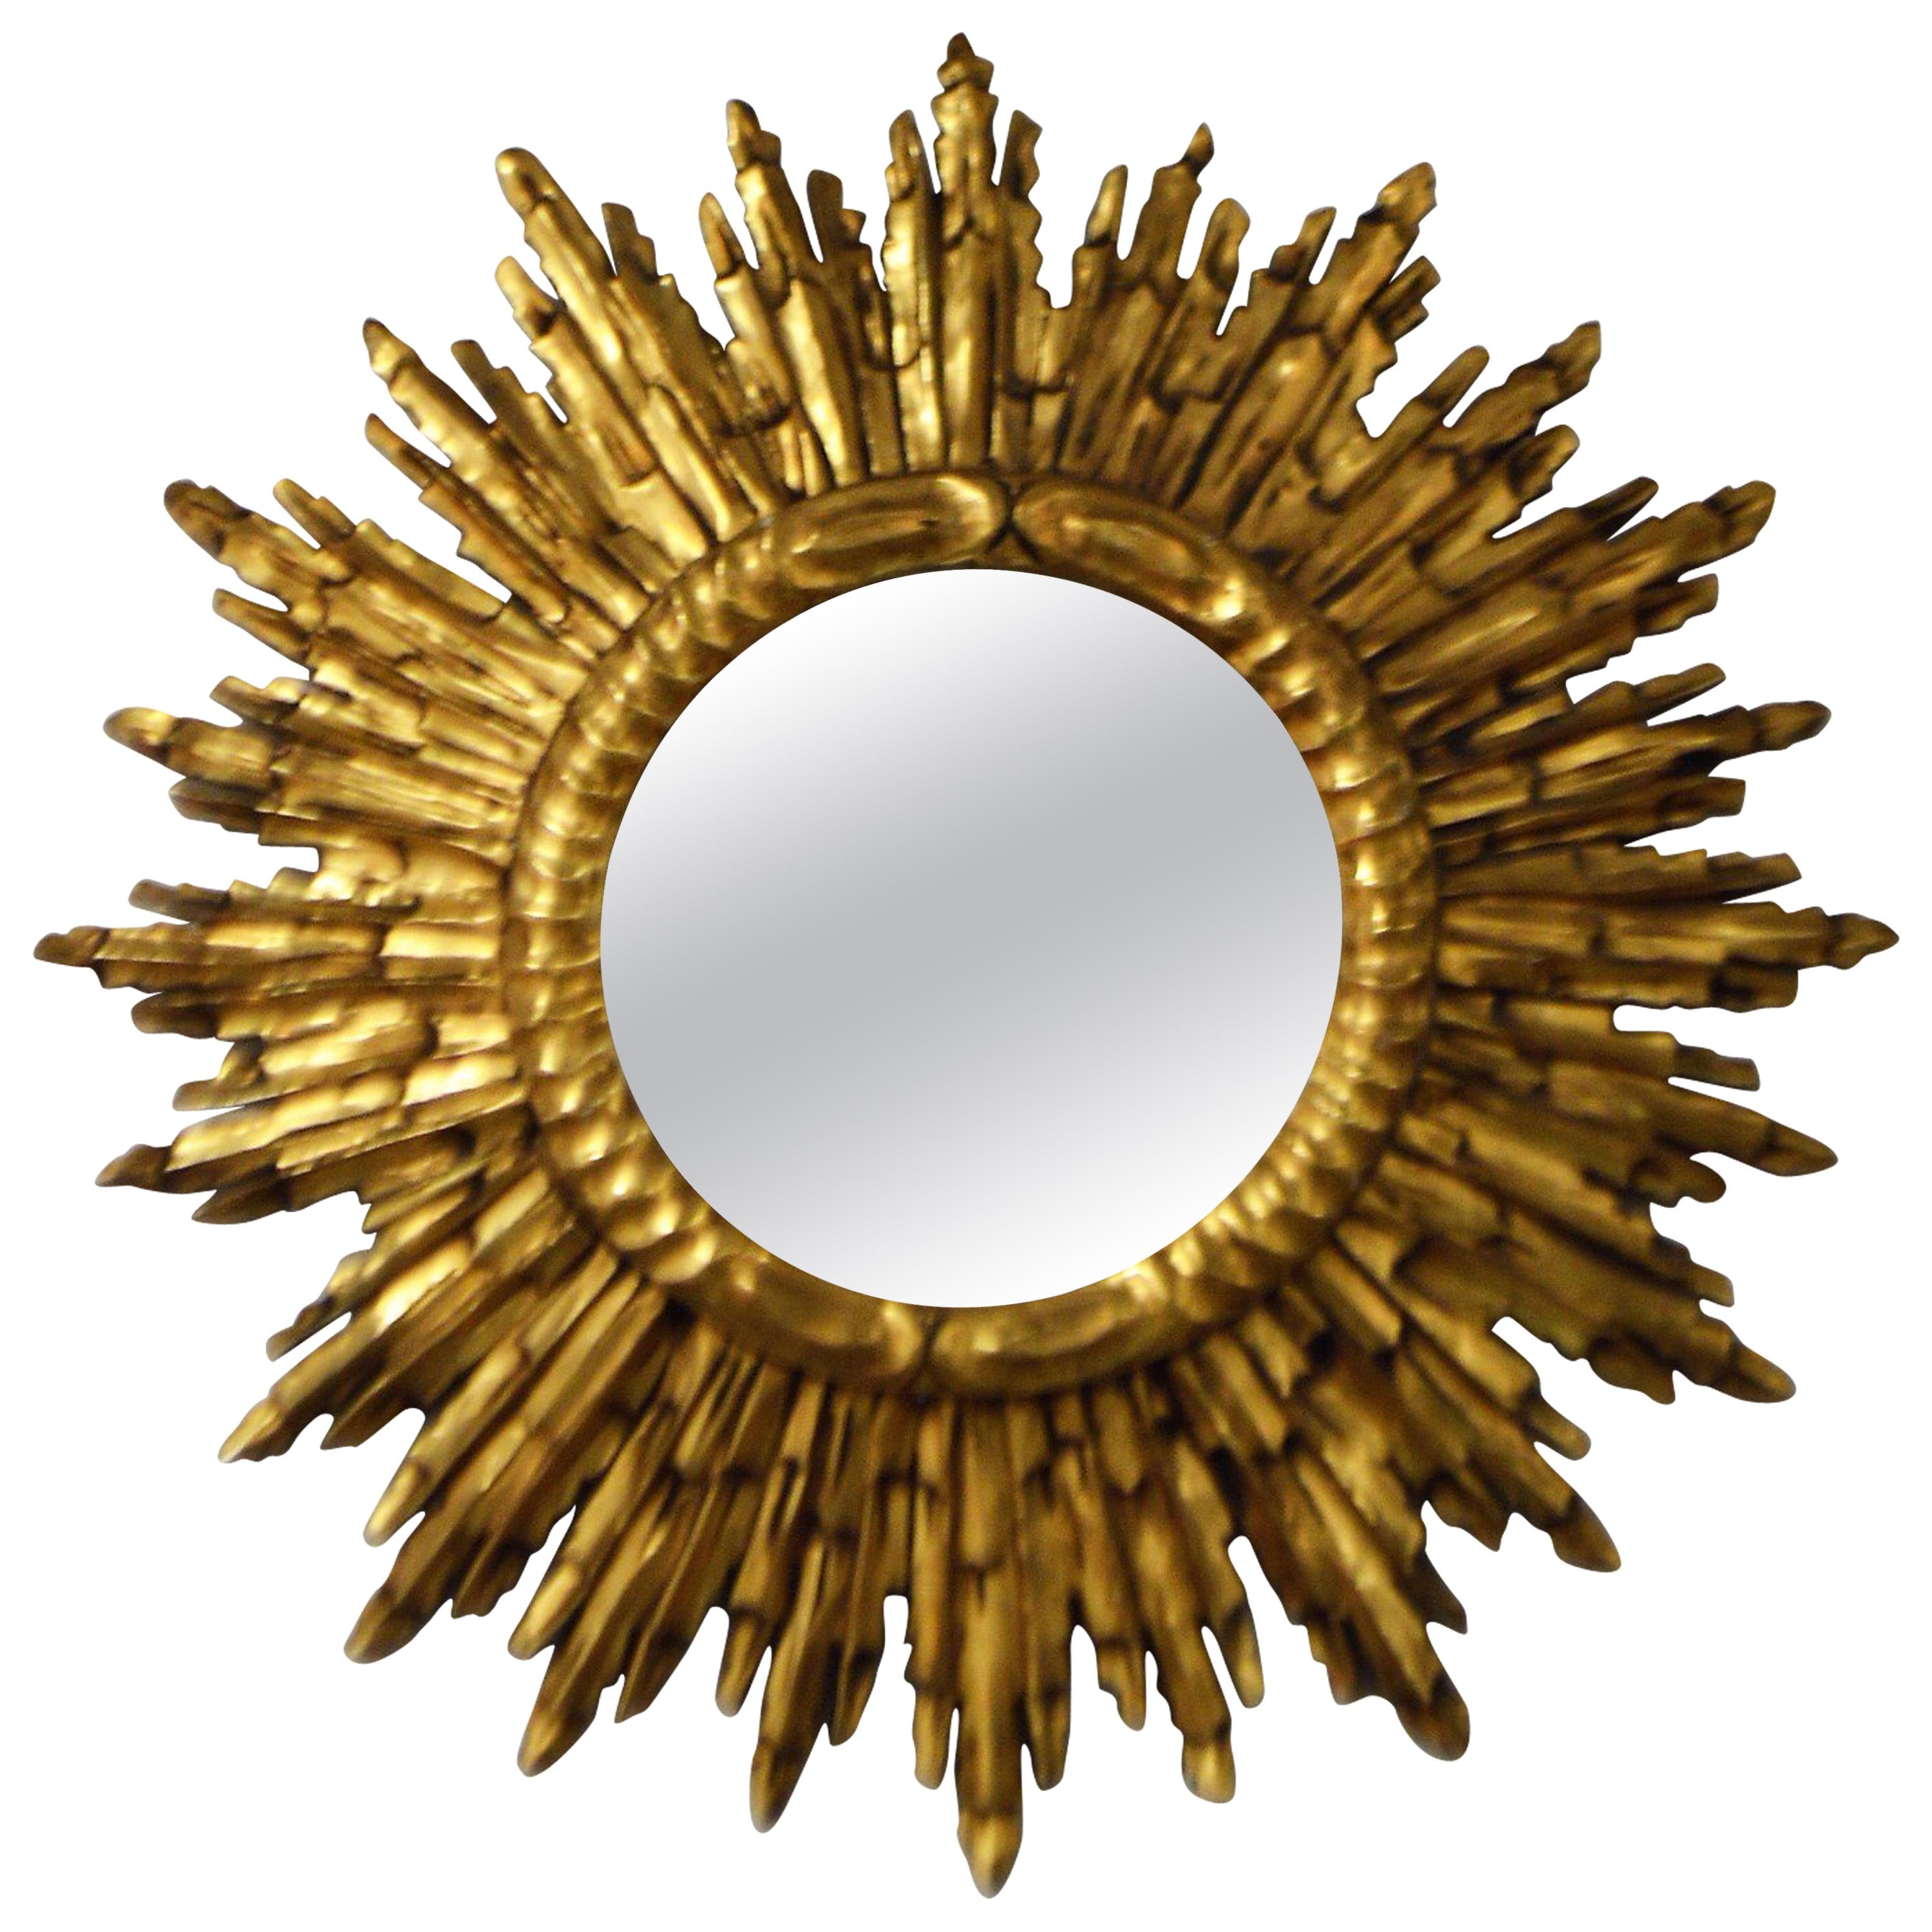 Gilded Wooden Sunburst Mirror from France, circa 1920